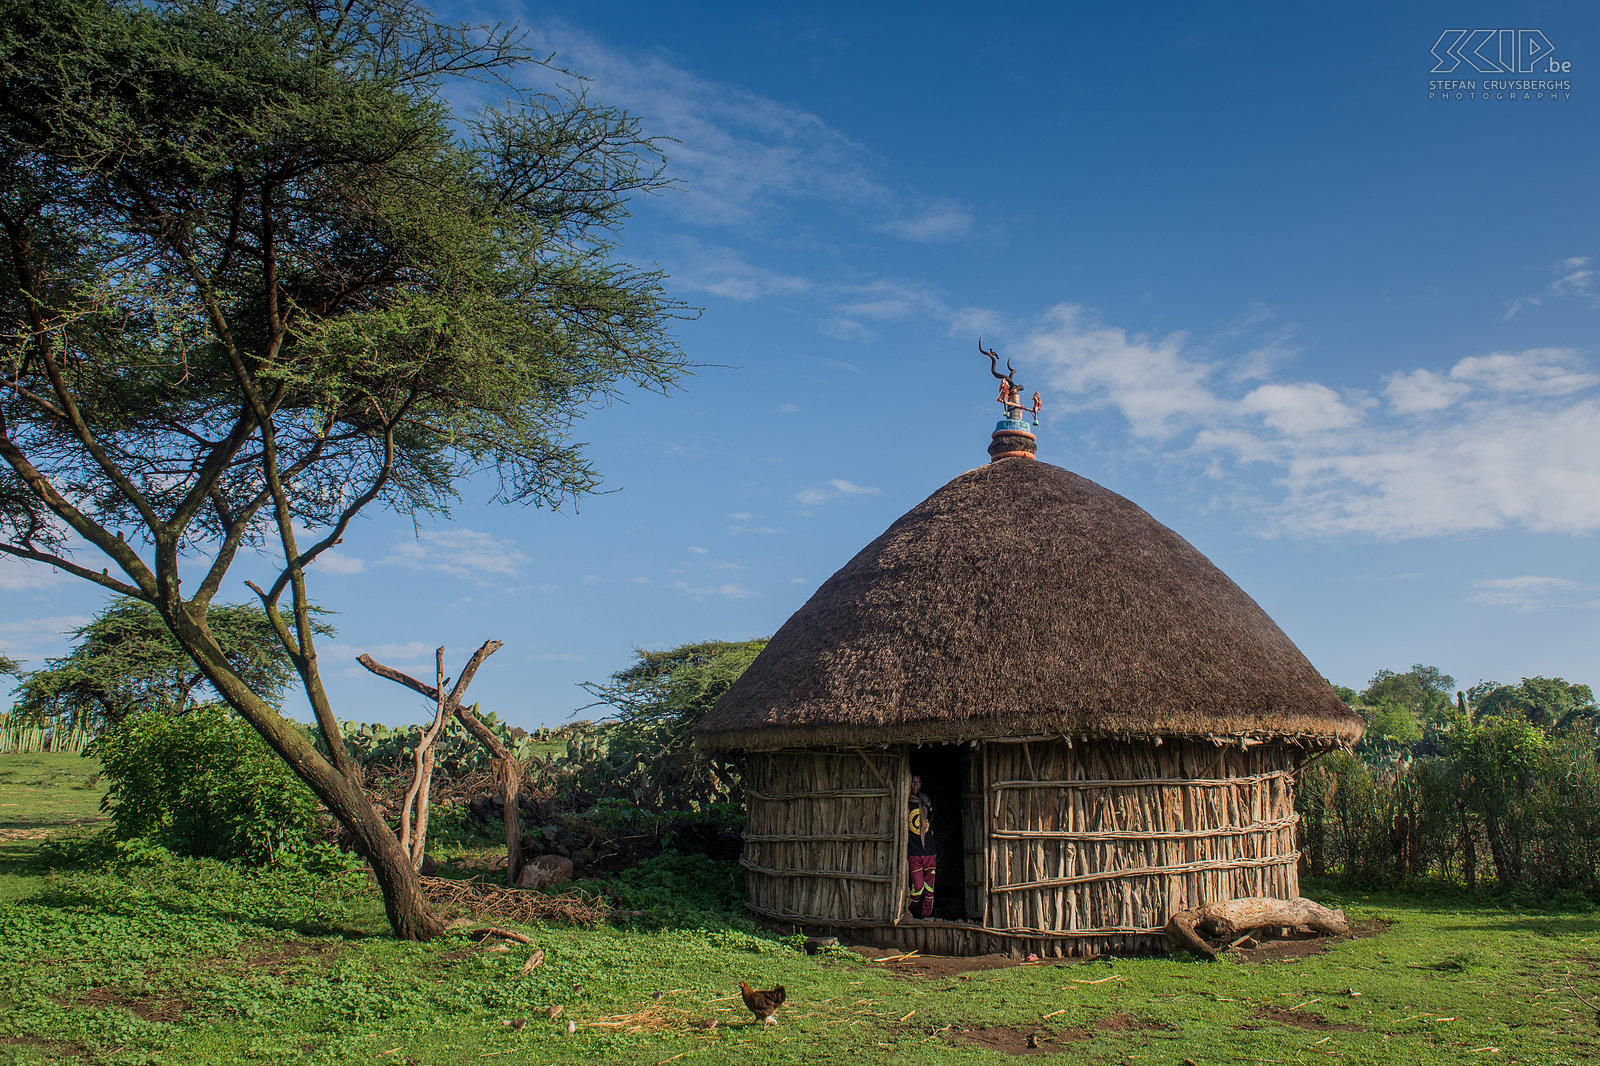 Lake Chitu - Hut A traditional hut in the Rift Valley region in Ethiopia Stefan Cruysberghs